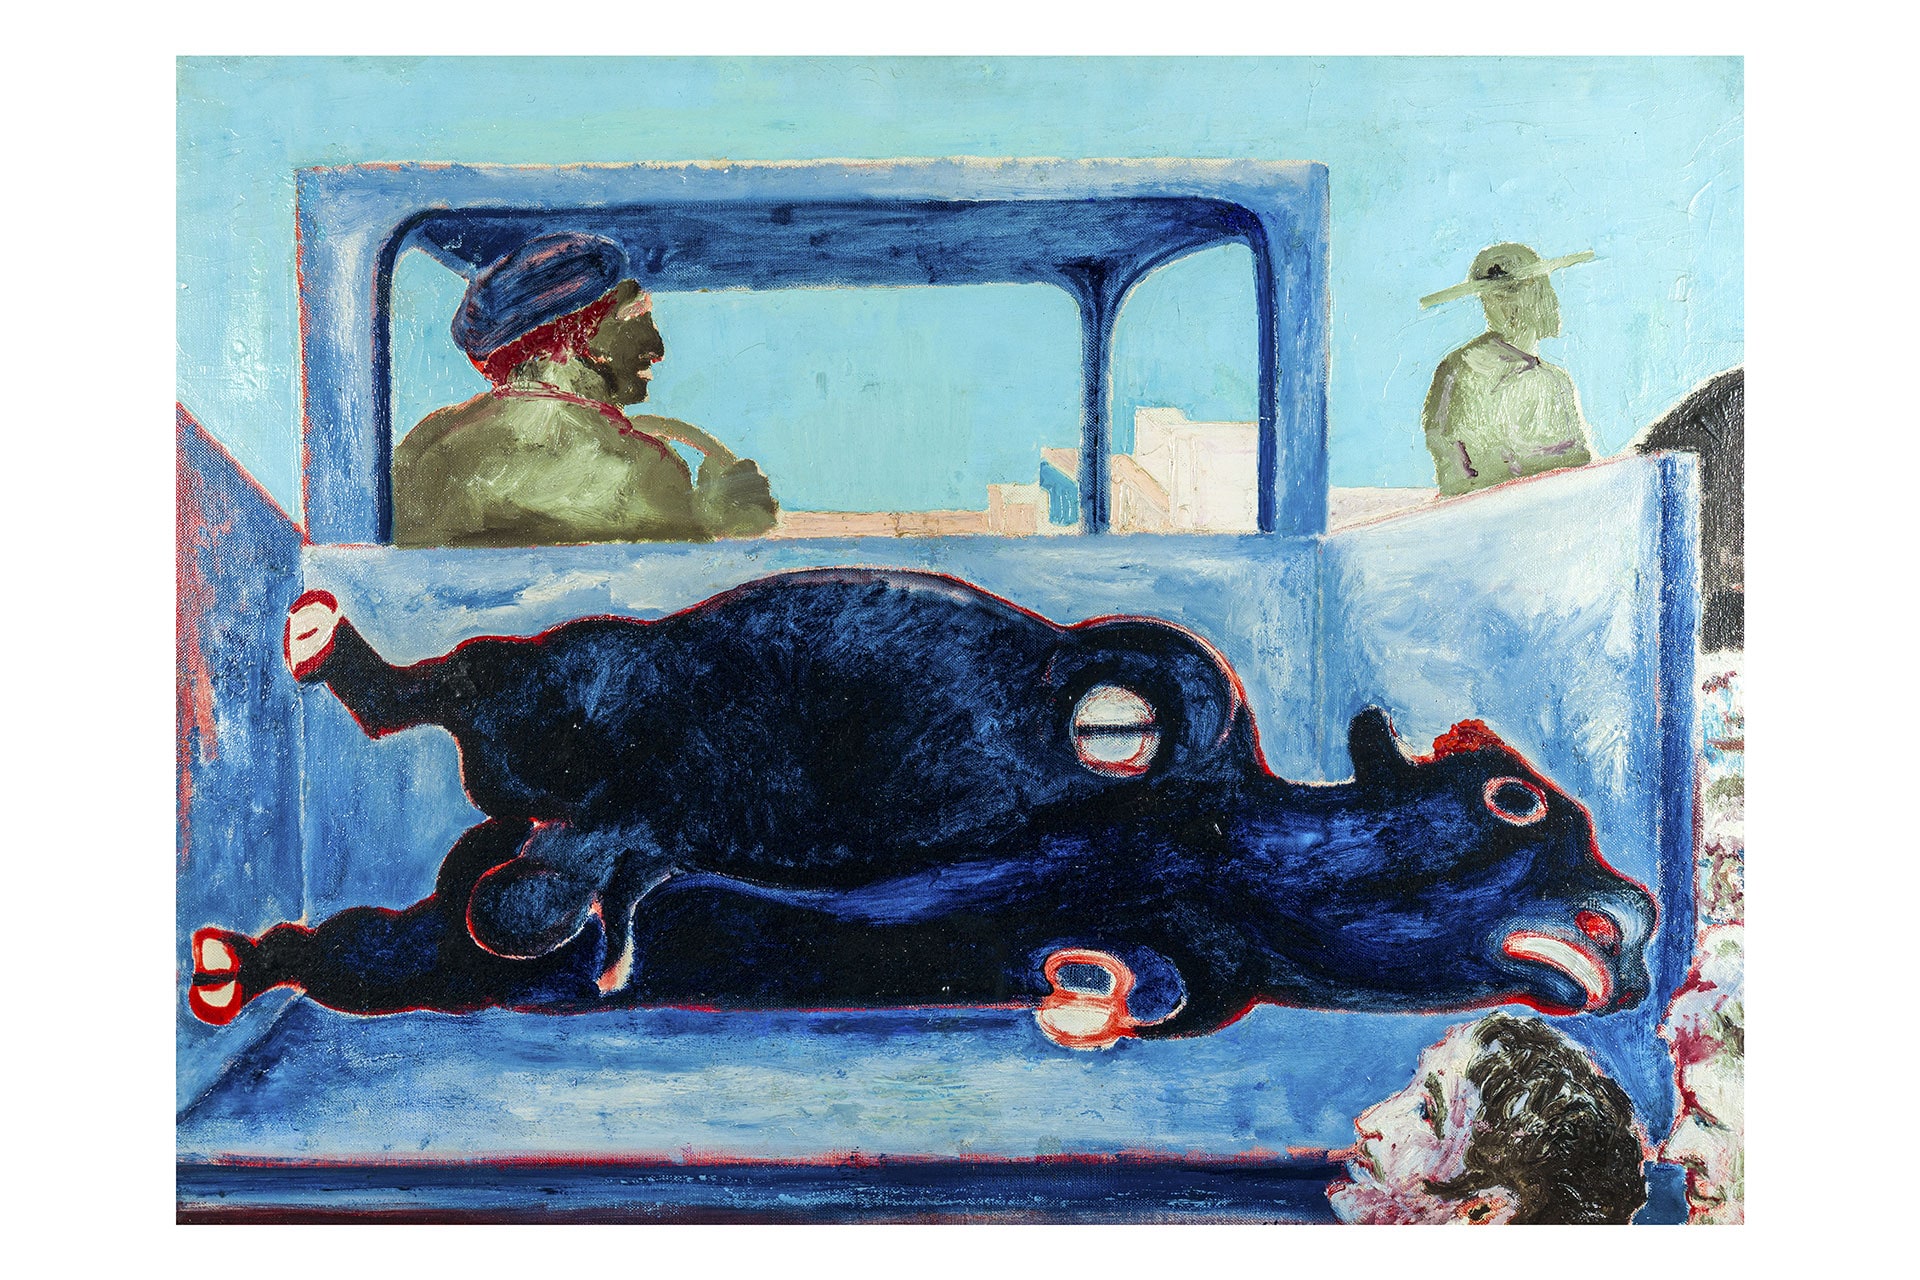  Aligi Sassu "El rey destronado", 1964. Olio su tela, cm 60x80 